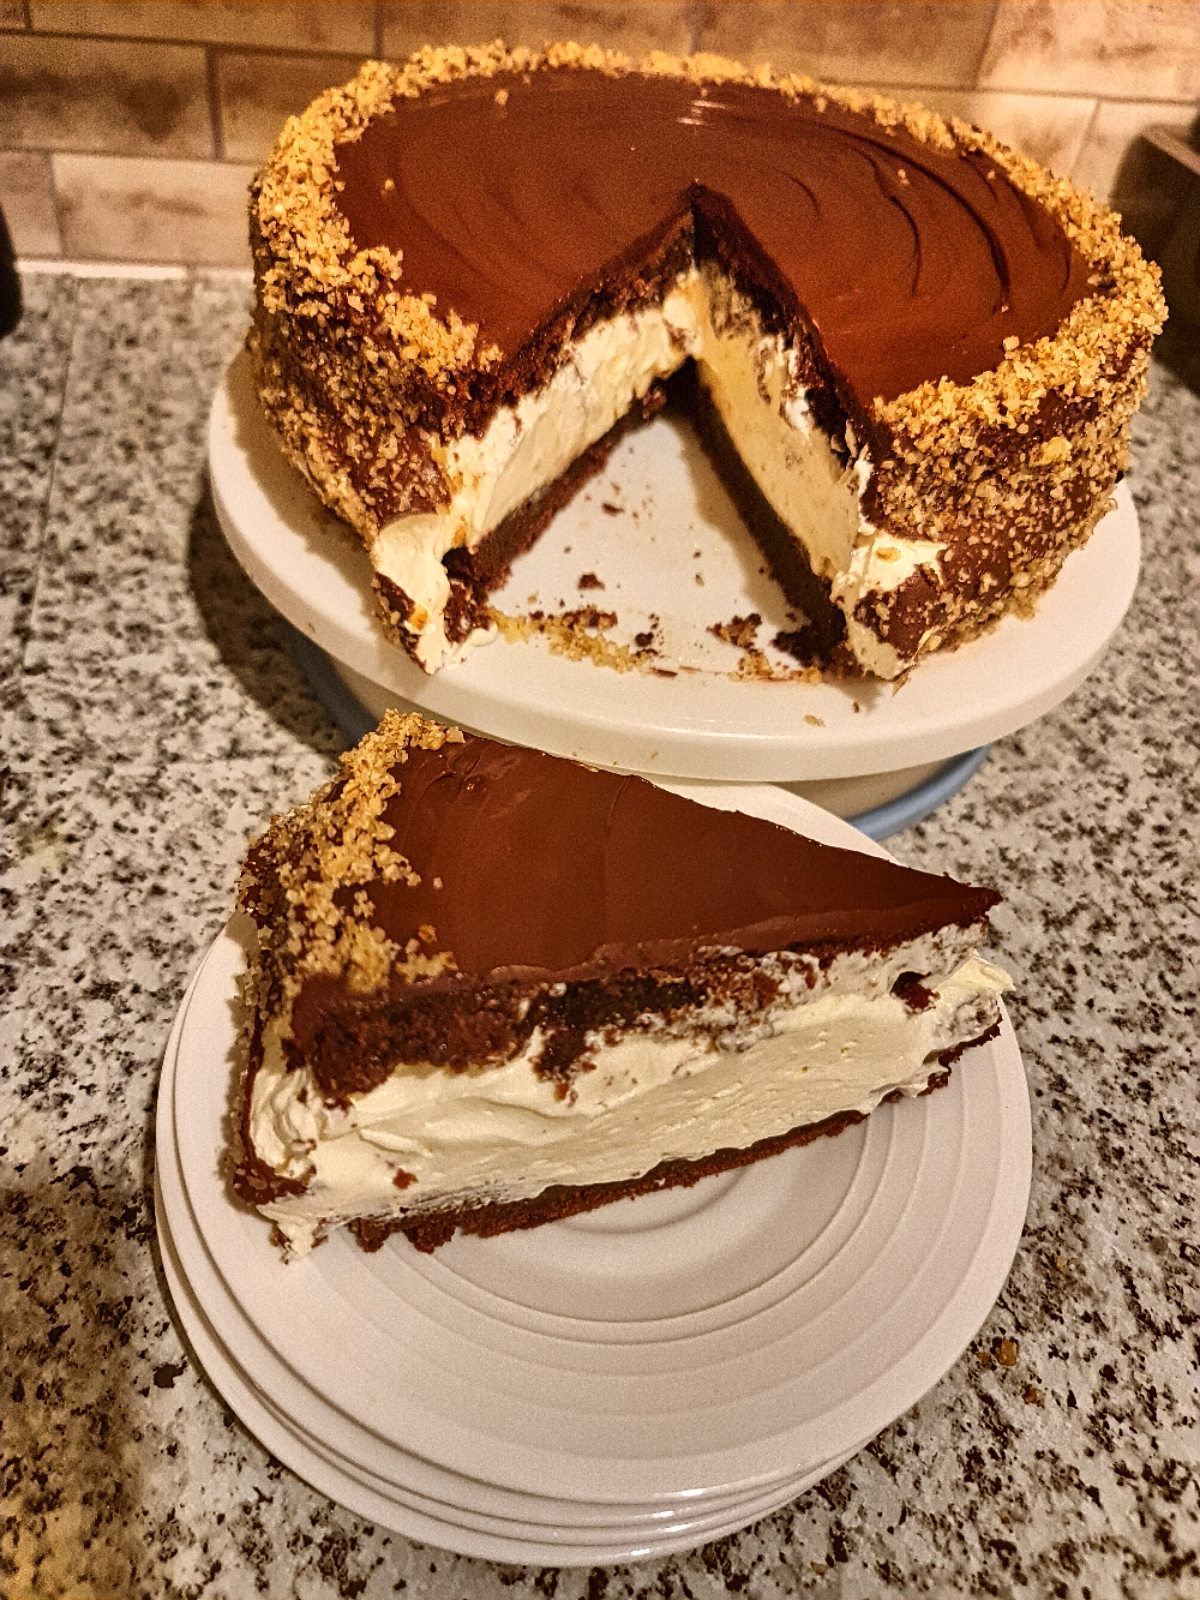 Tort negresa ( Brownie cake )